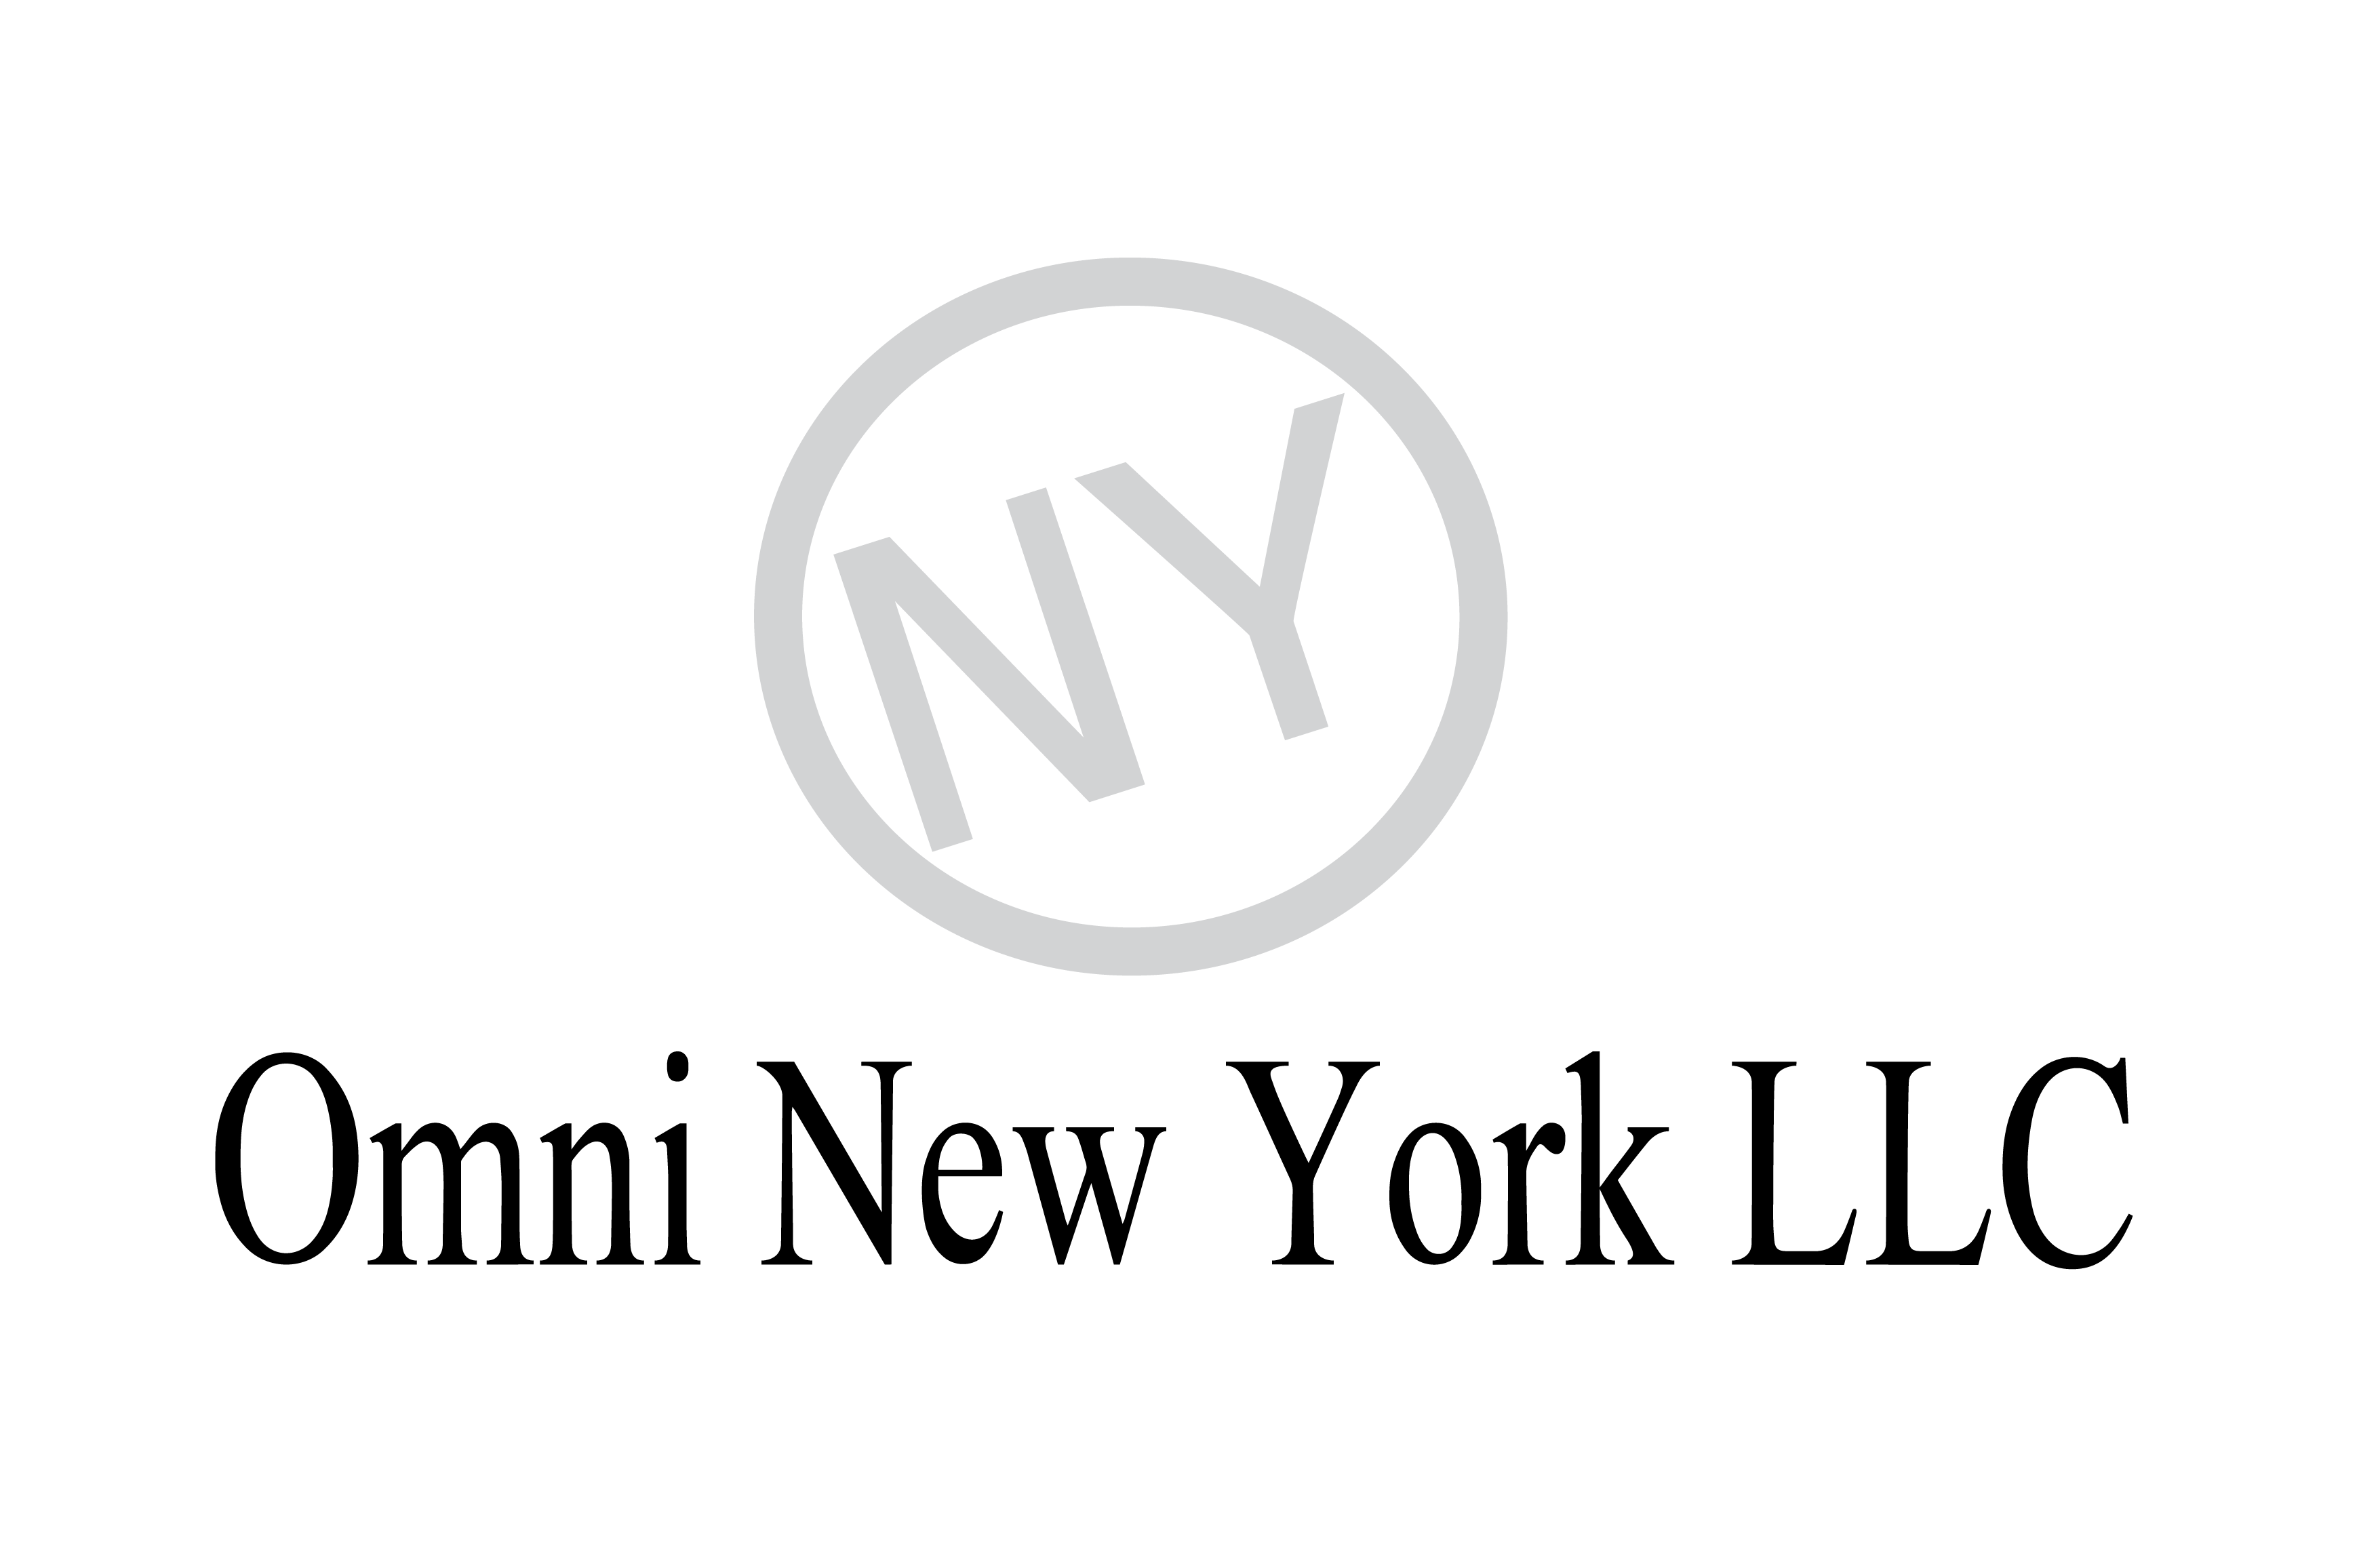 Omni New York logo